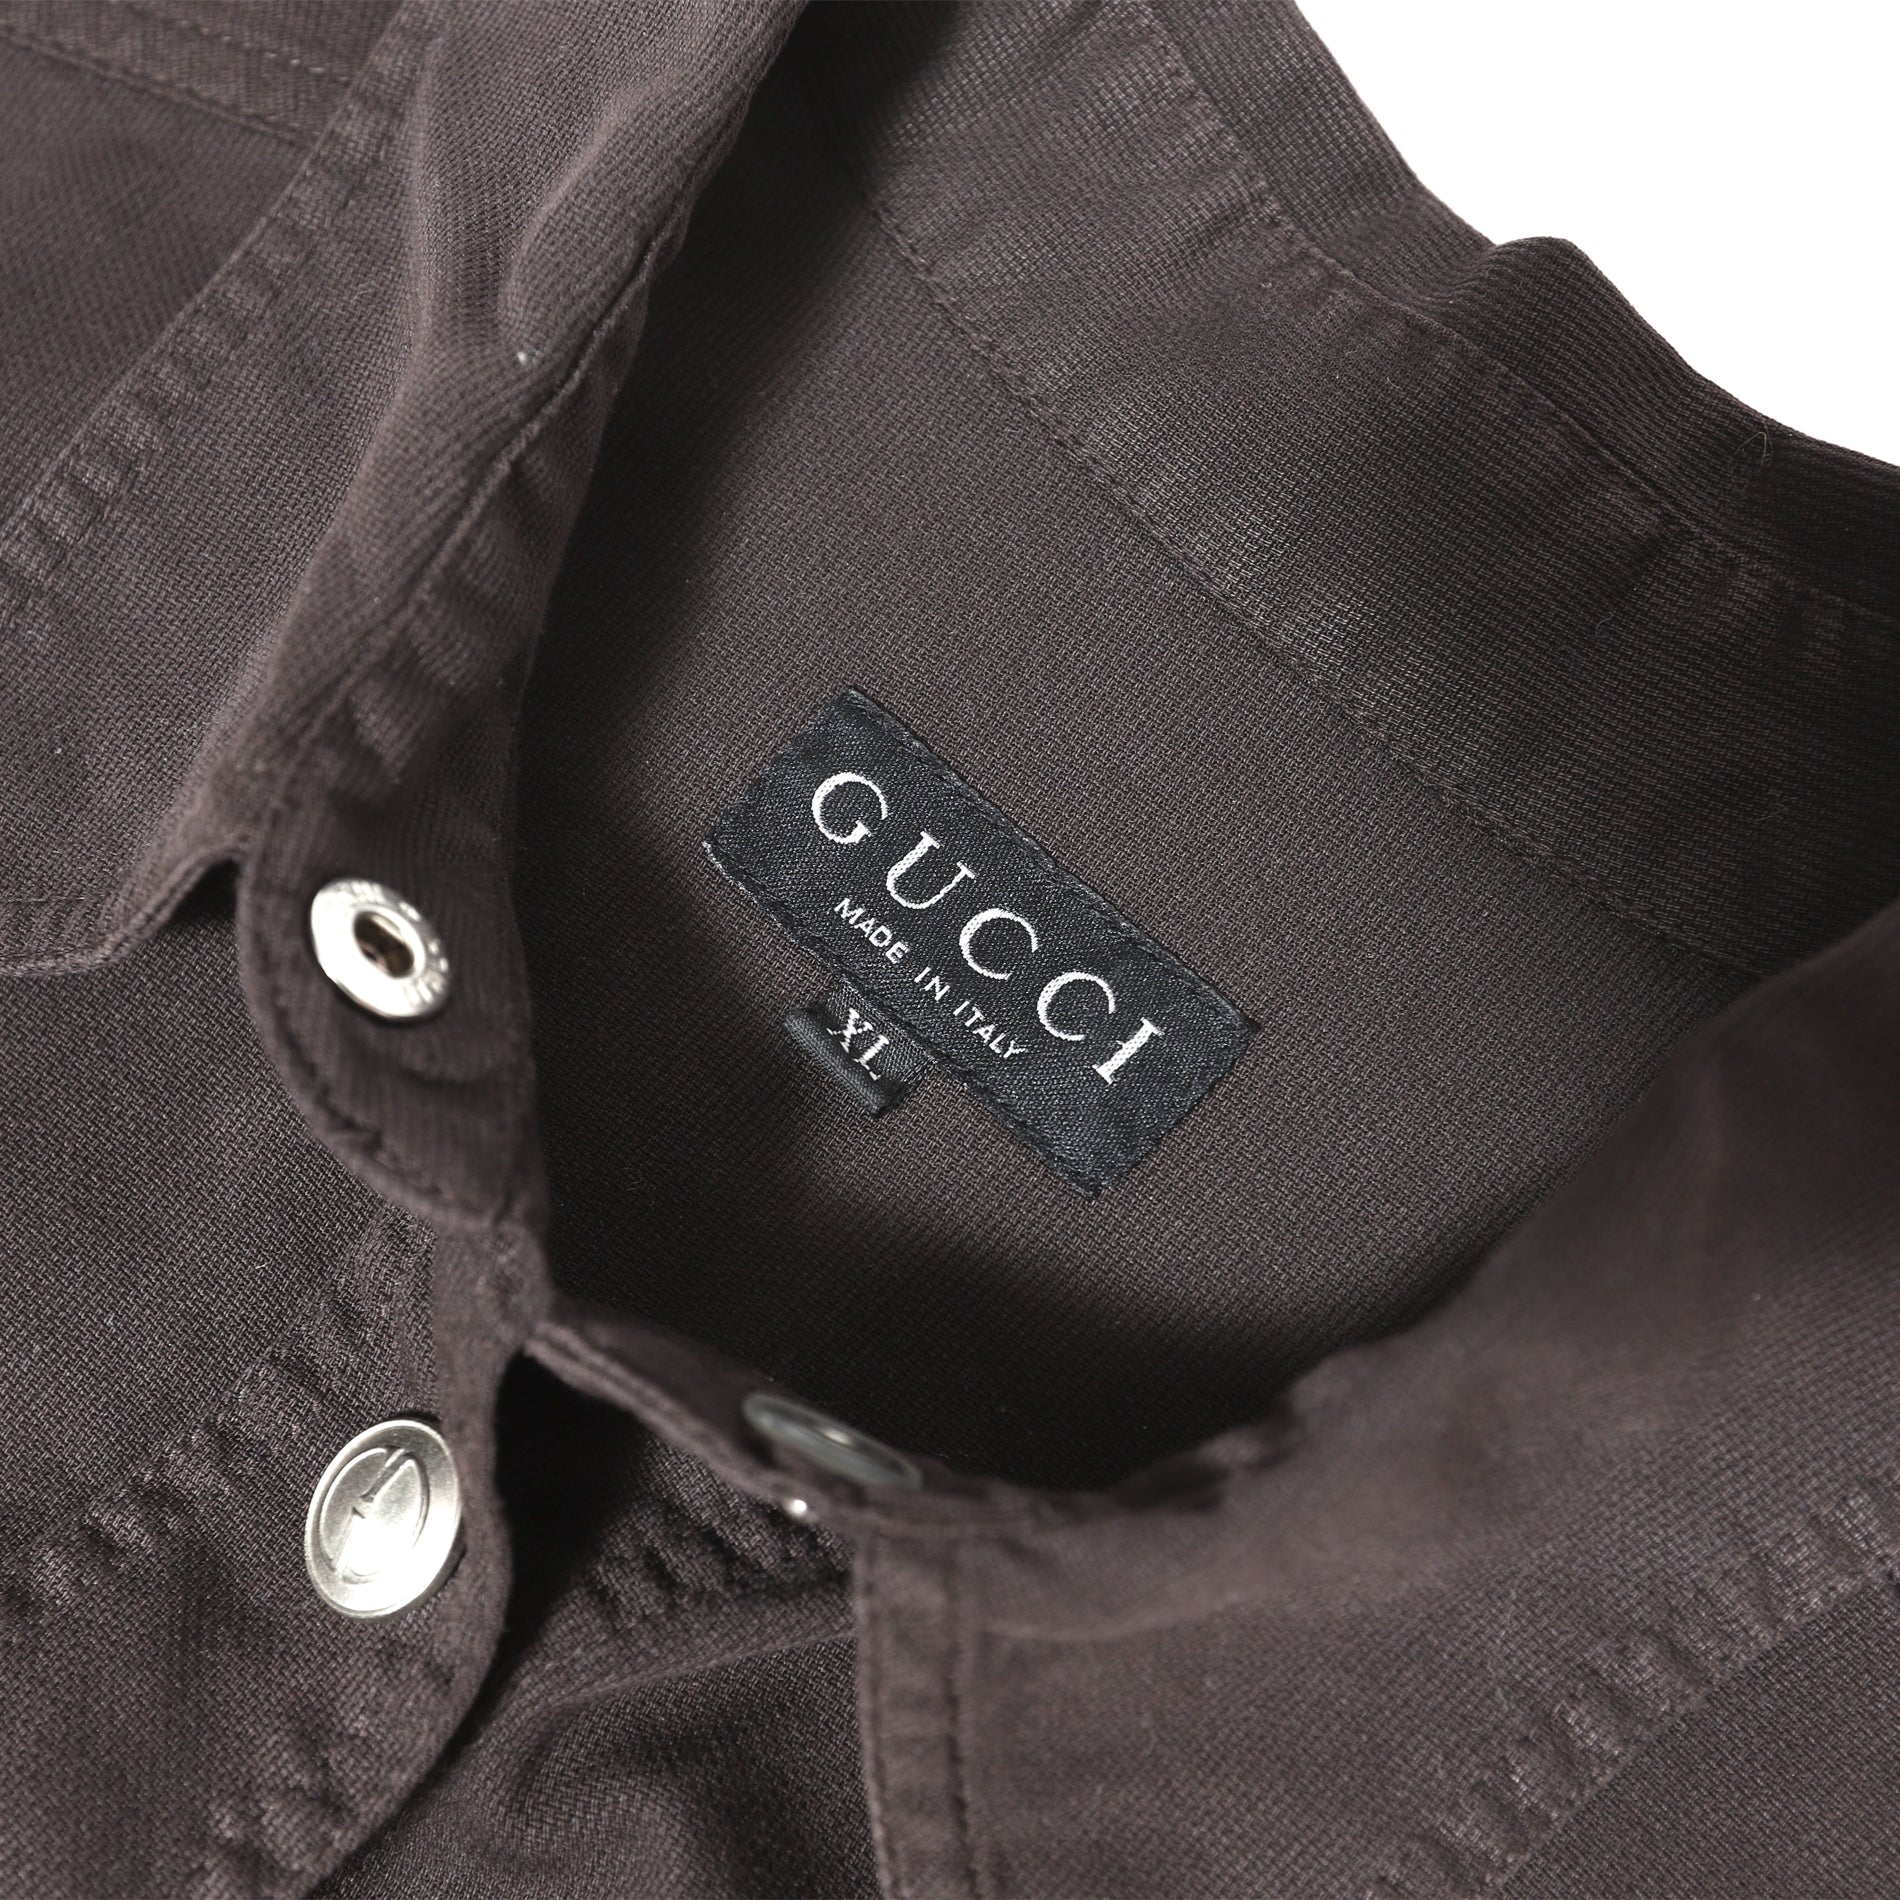 Gucci by Tom Ford FW95 Corduroy Body Shirt